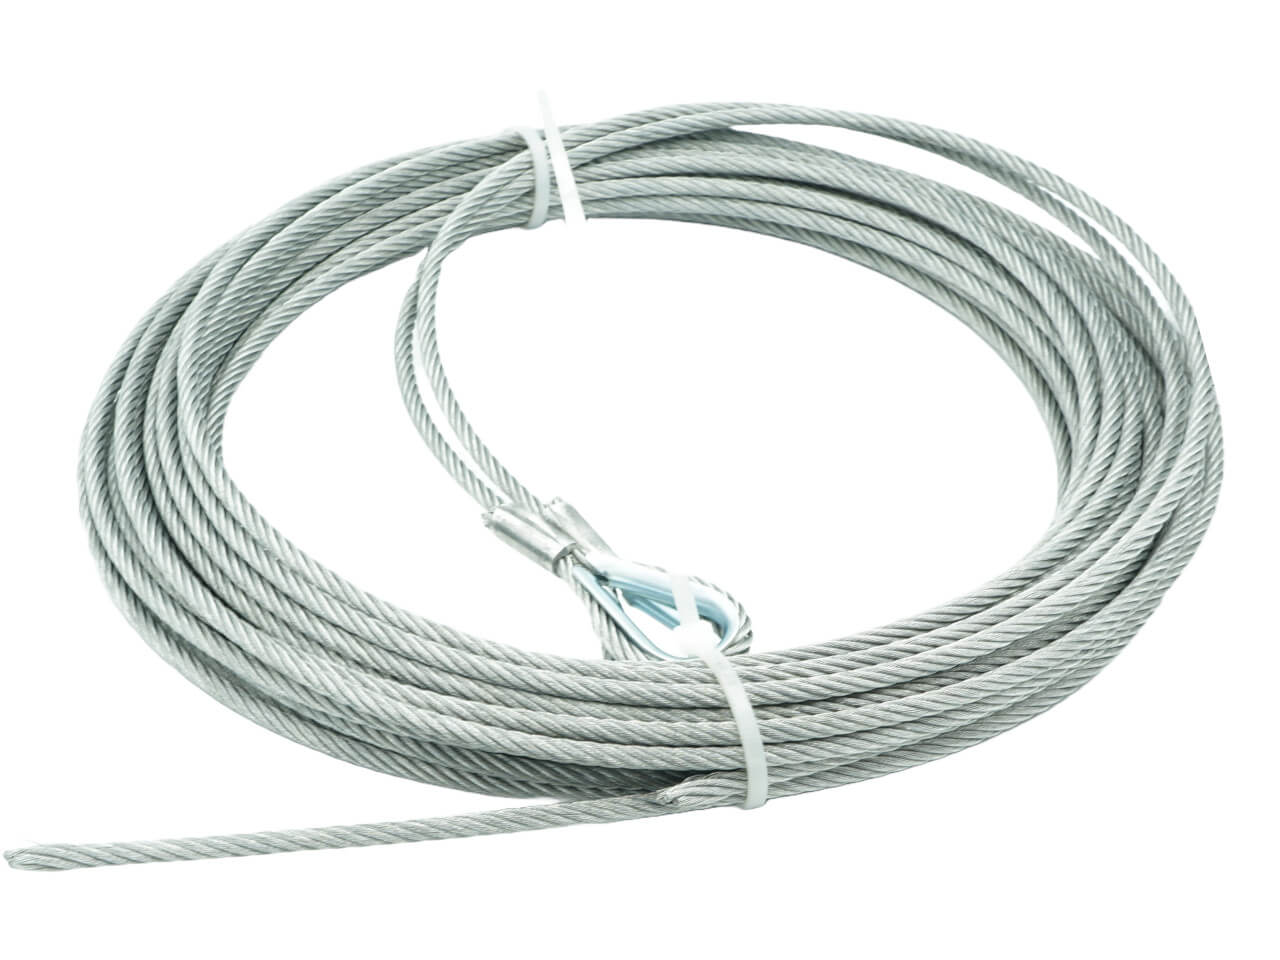 Cable Diameter 5,0mm Length 14m